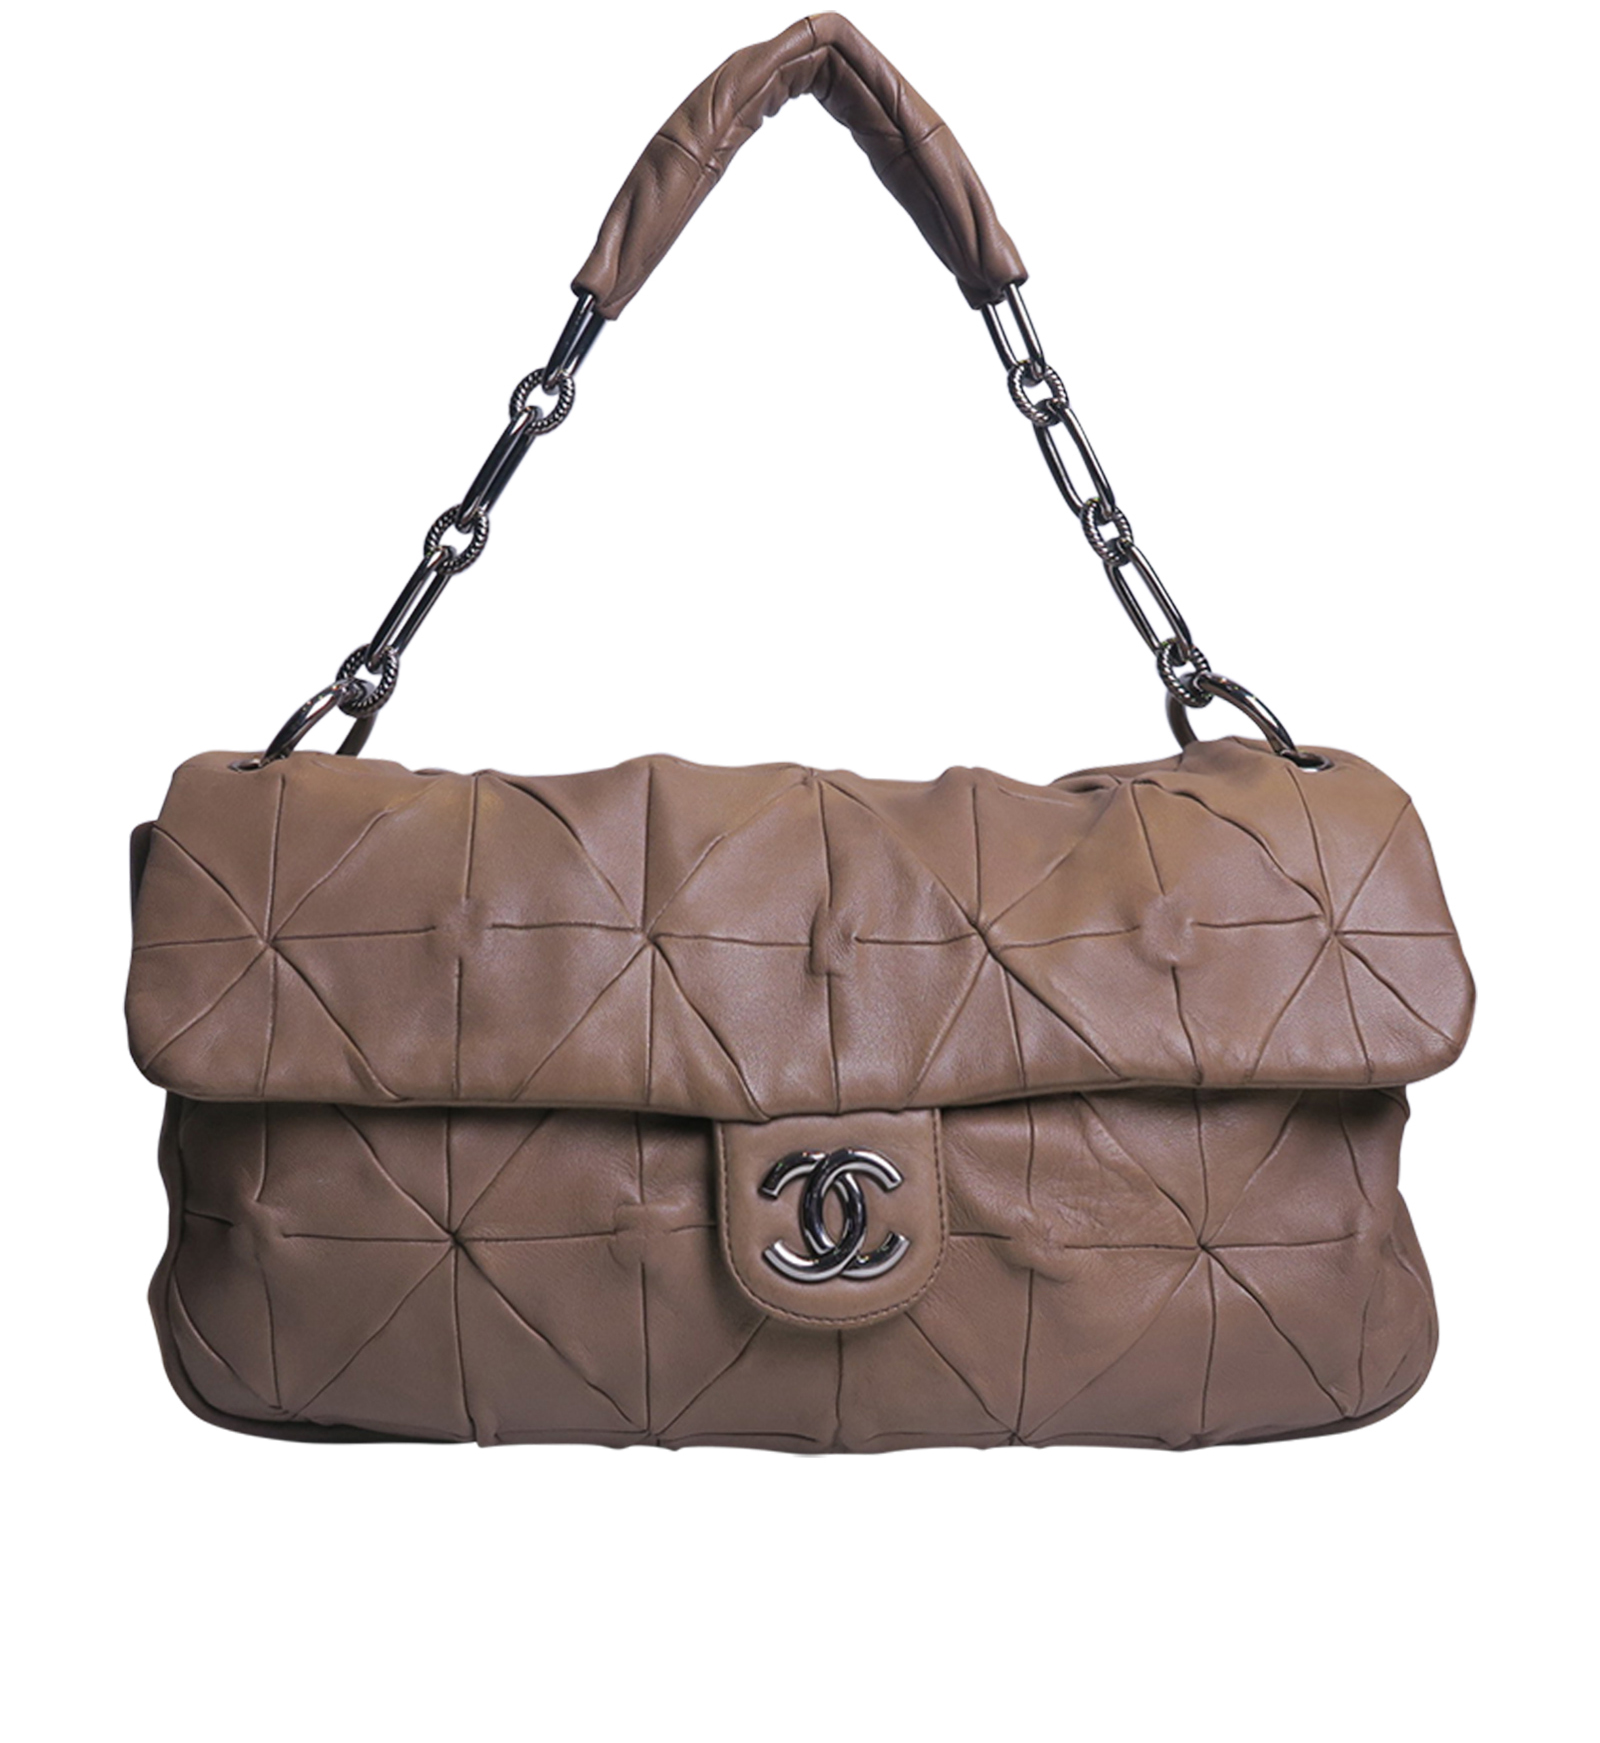 The Chanel XXL Bag Has 2 Sizes Now, Bragmybag